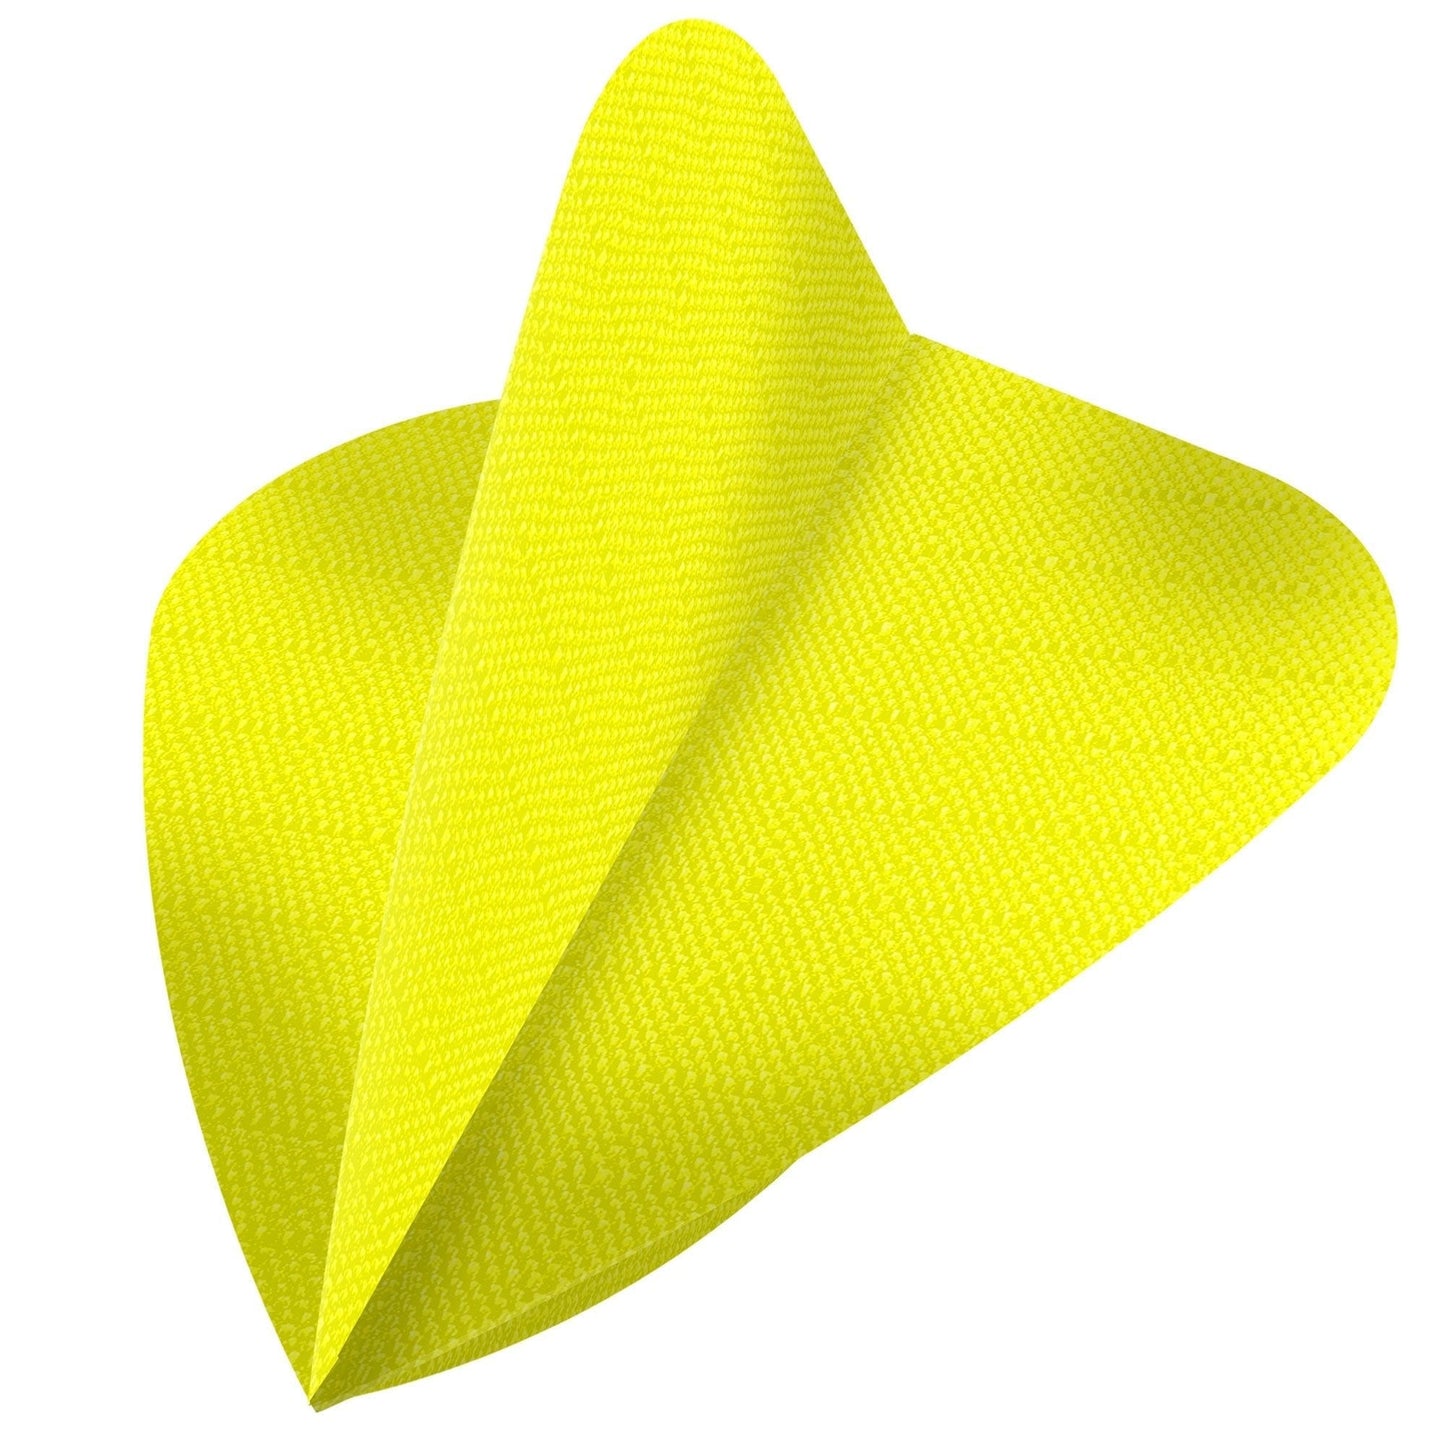 *Designa Dart Flights - Fabric Rip Stop Nylon - Longlife - Kite